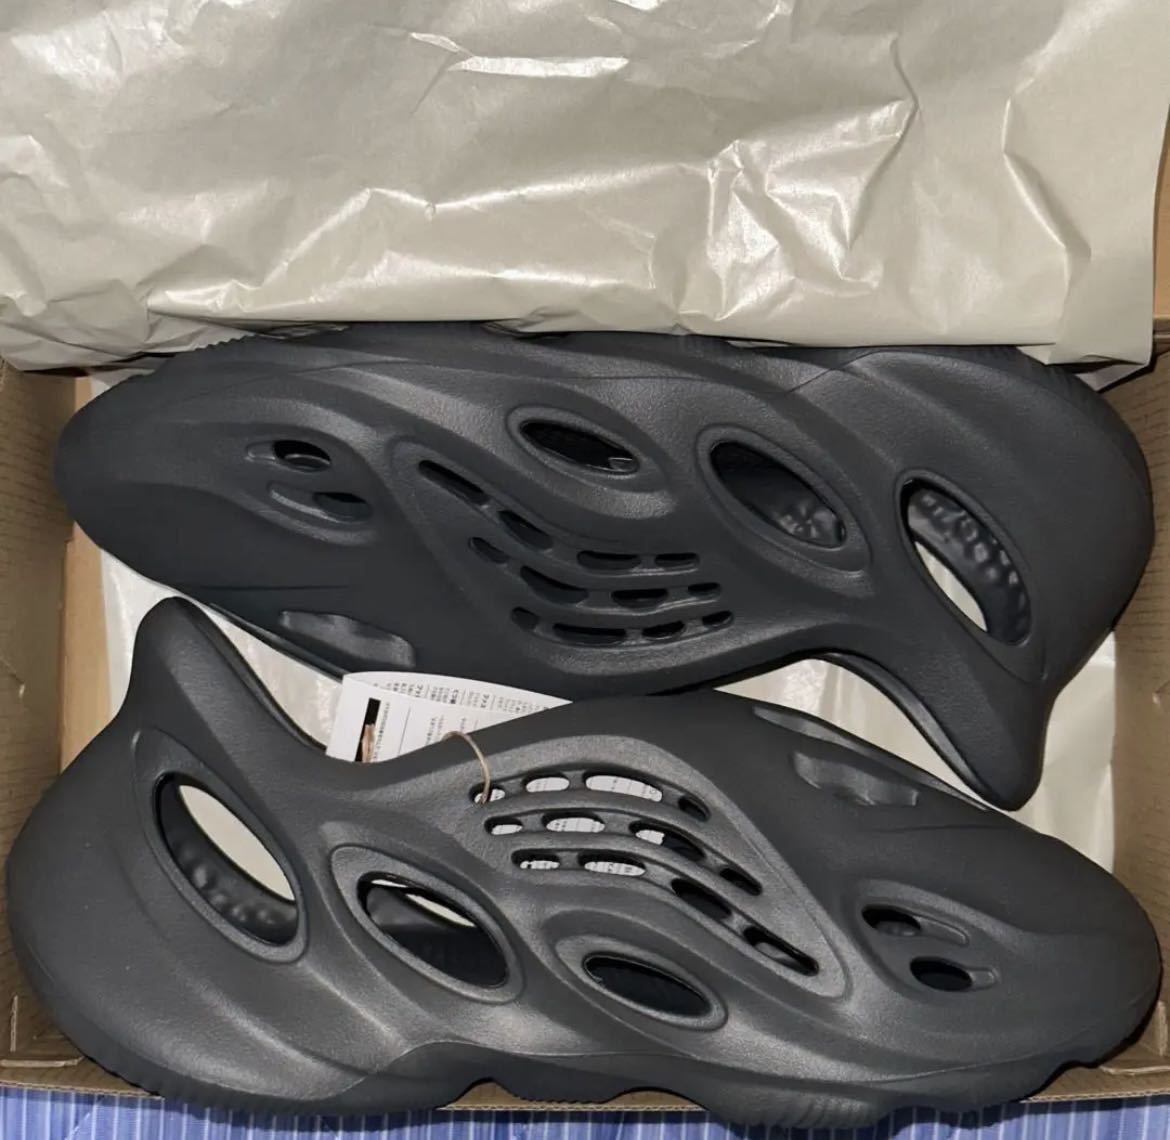 adidas Yeezy Foam Runner “CARBON” rnr イージー フォームランナー